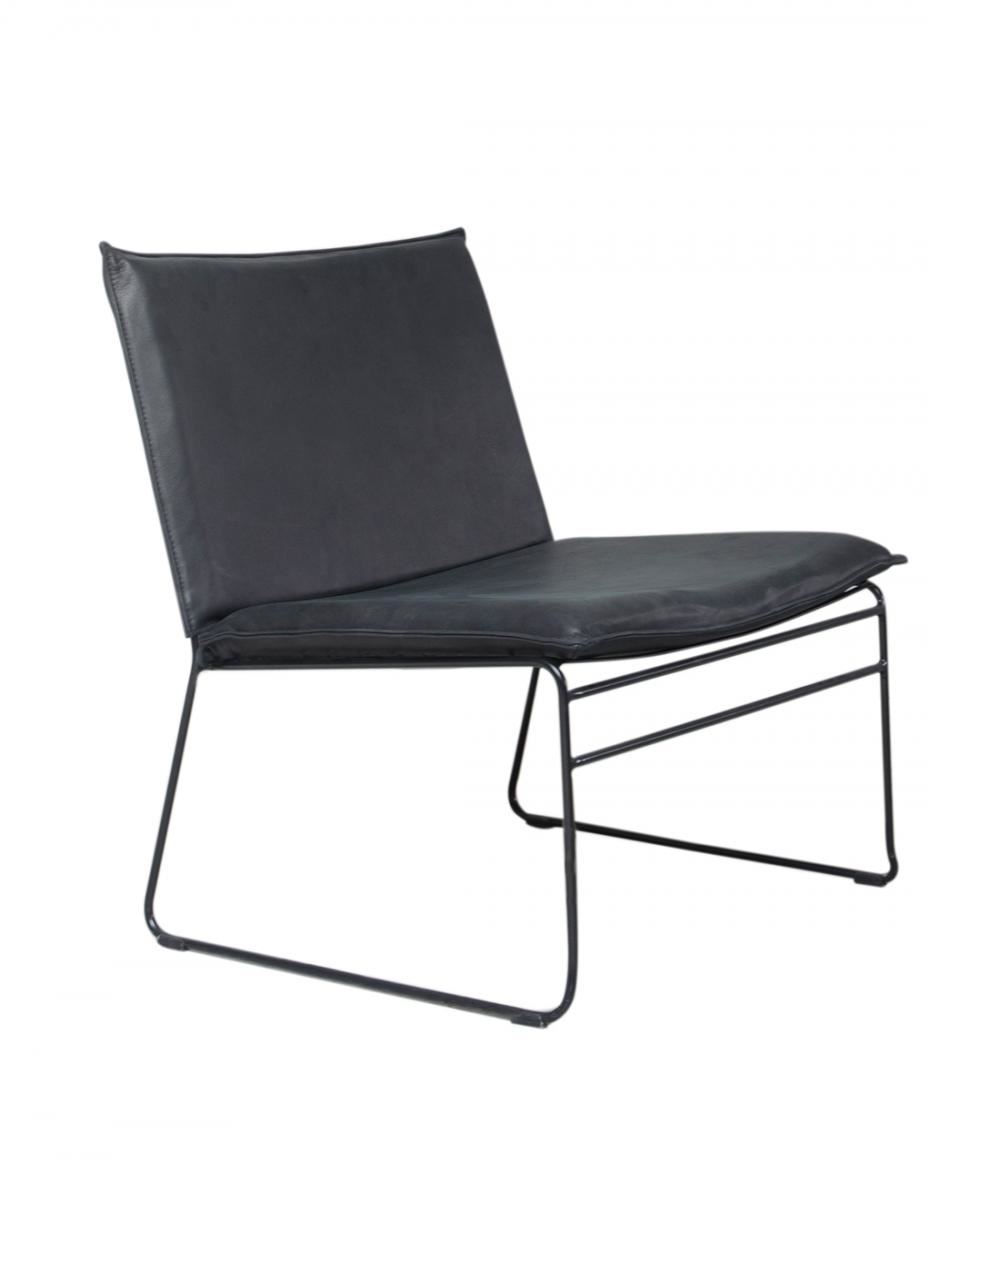 Kyst Lounge Chair Outdoor Lounge Chair With Dark Grey Cushion Ottoman No Cushion